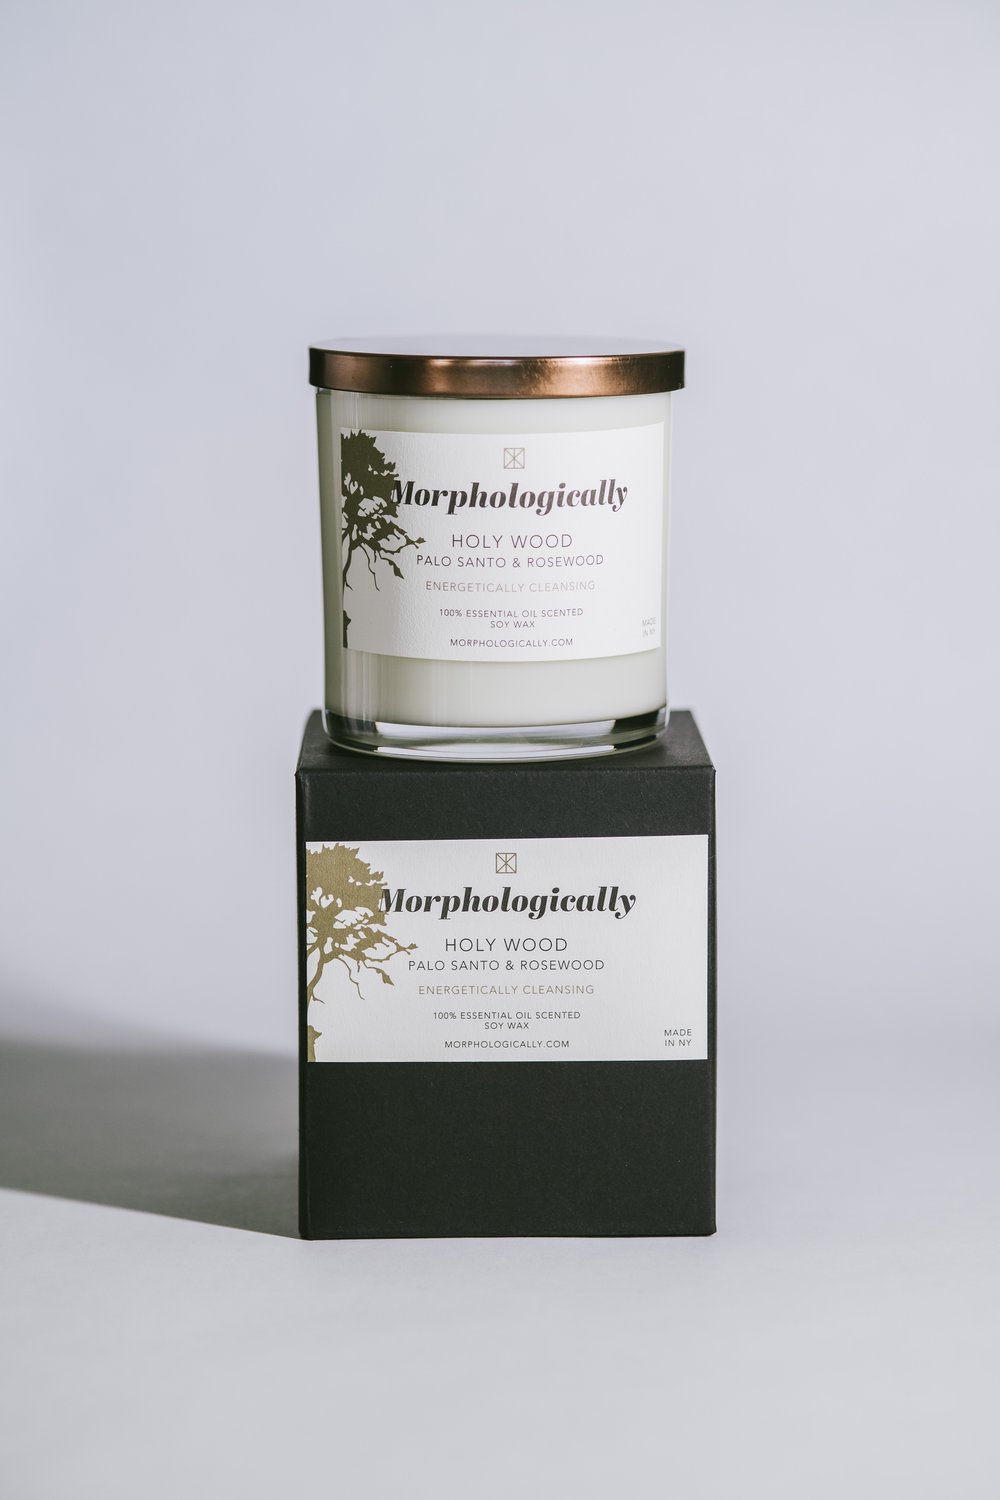 Palo Santo Pure & Natural Soy Candle (100% Natural) For Purification &  Meditation